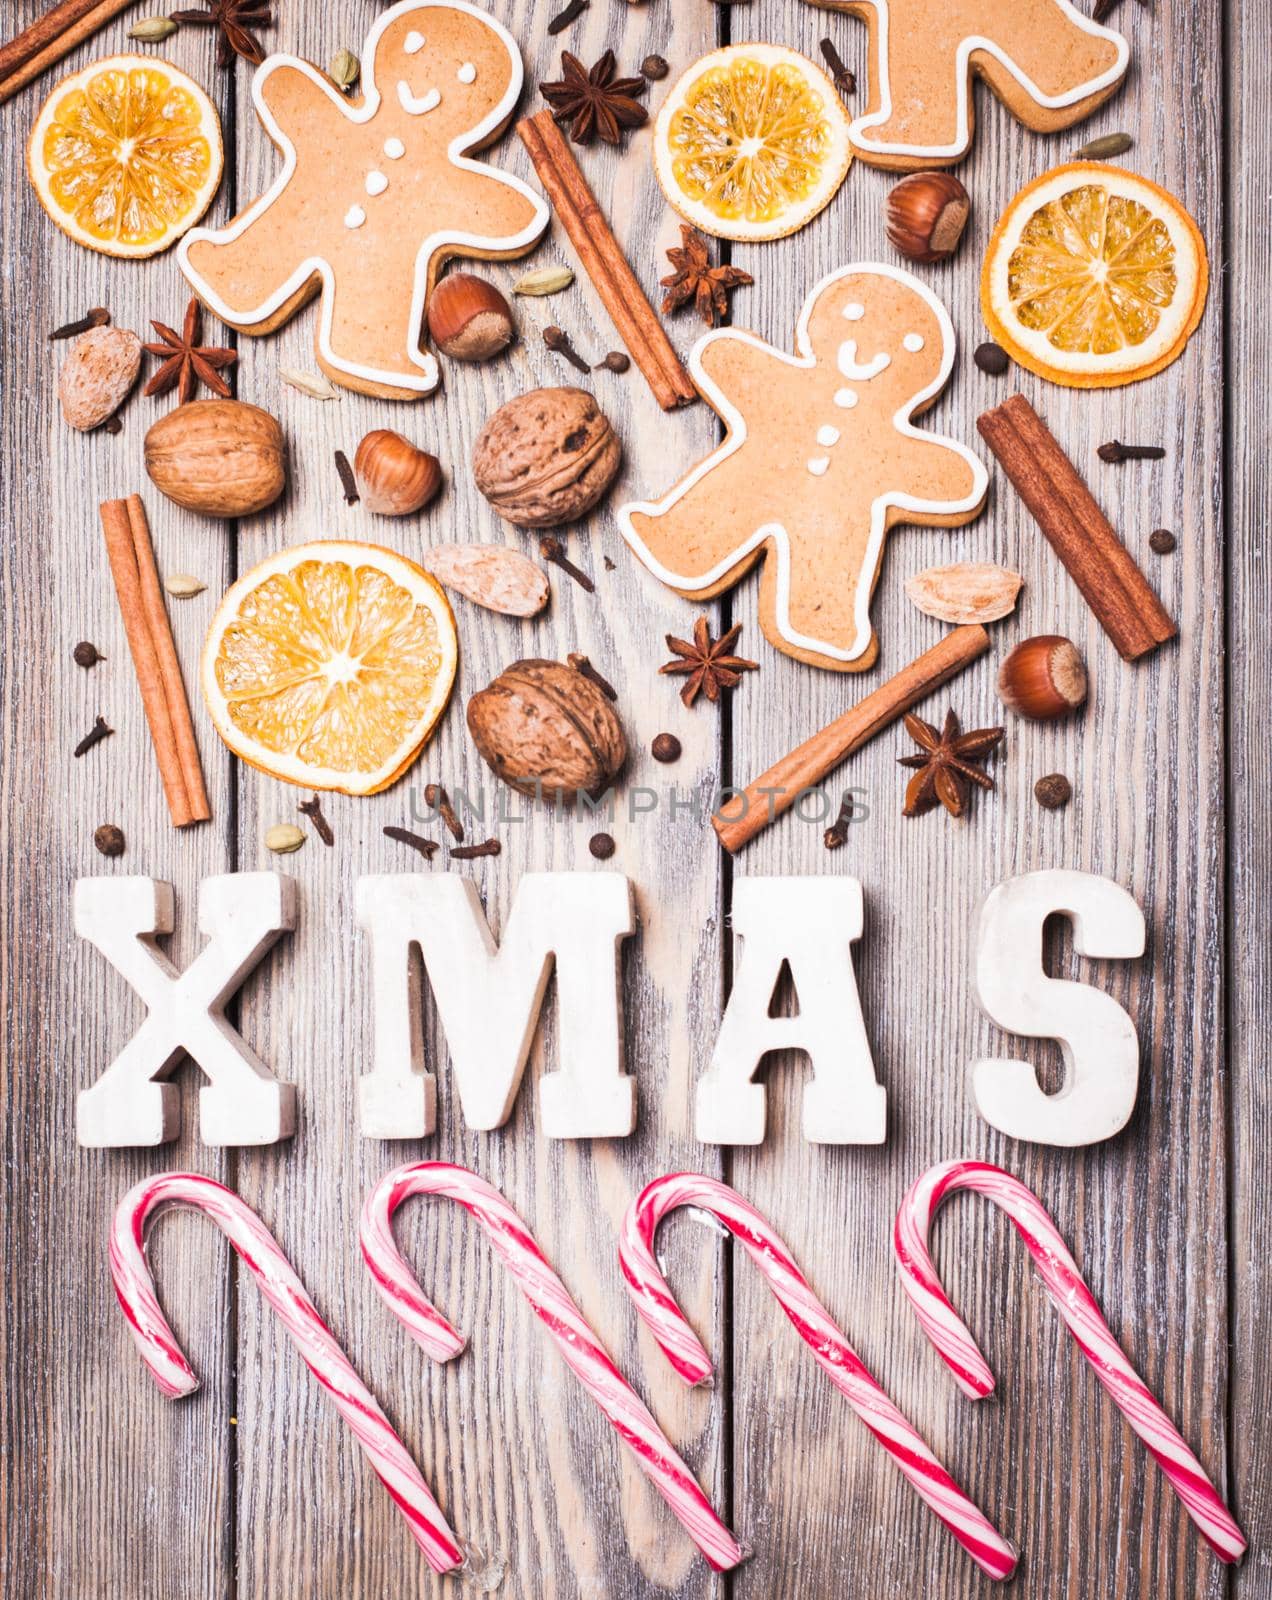 Christmas sweeties by oksix